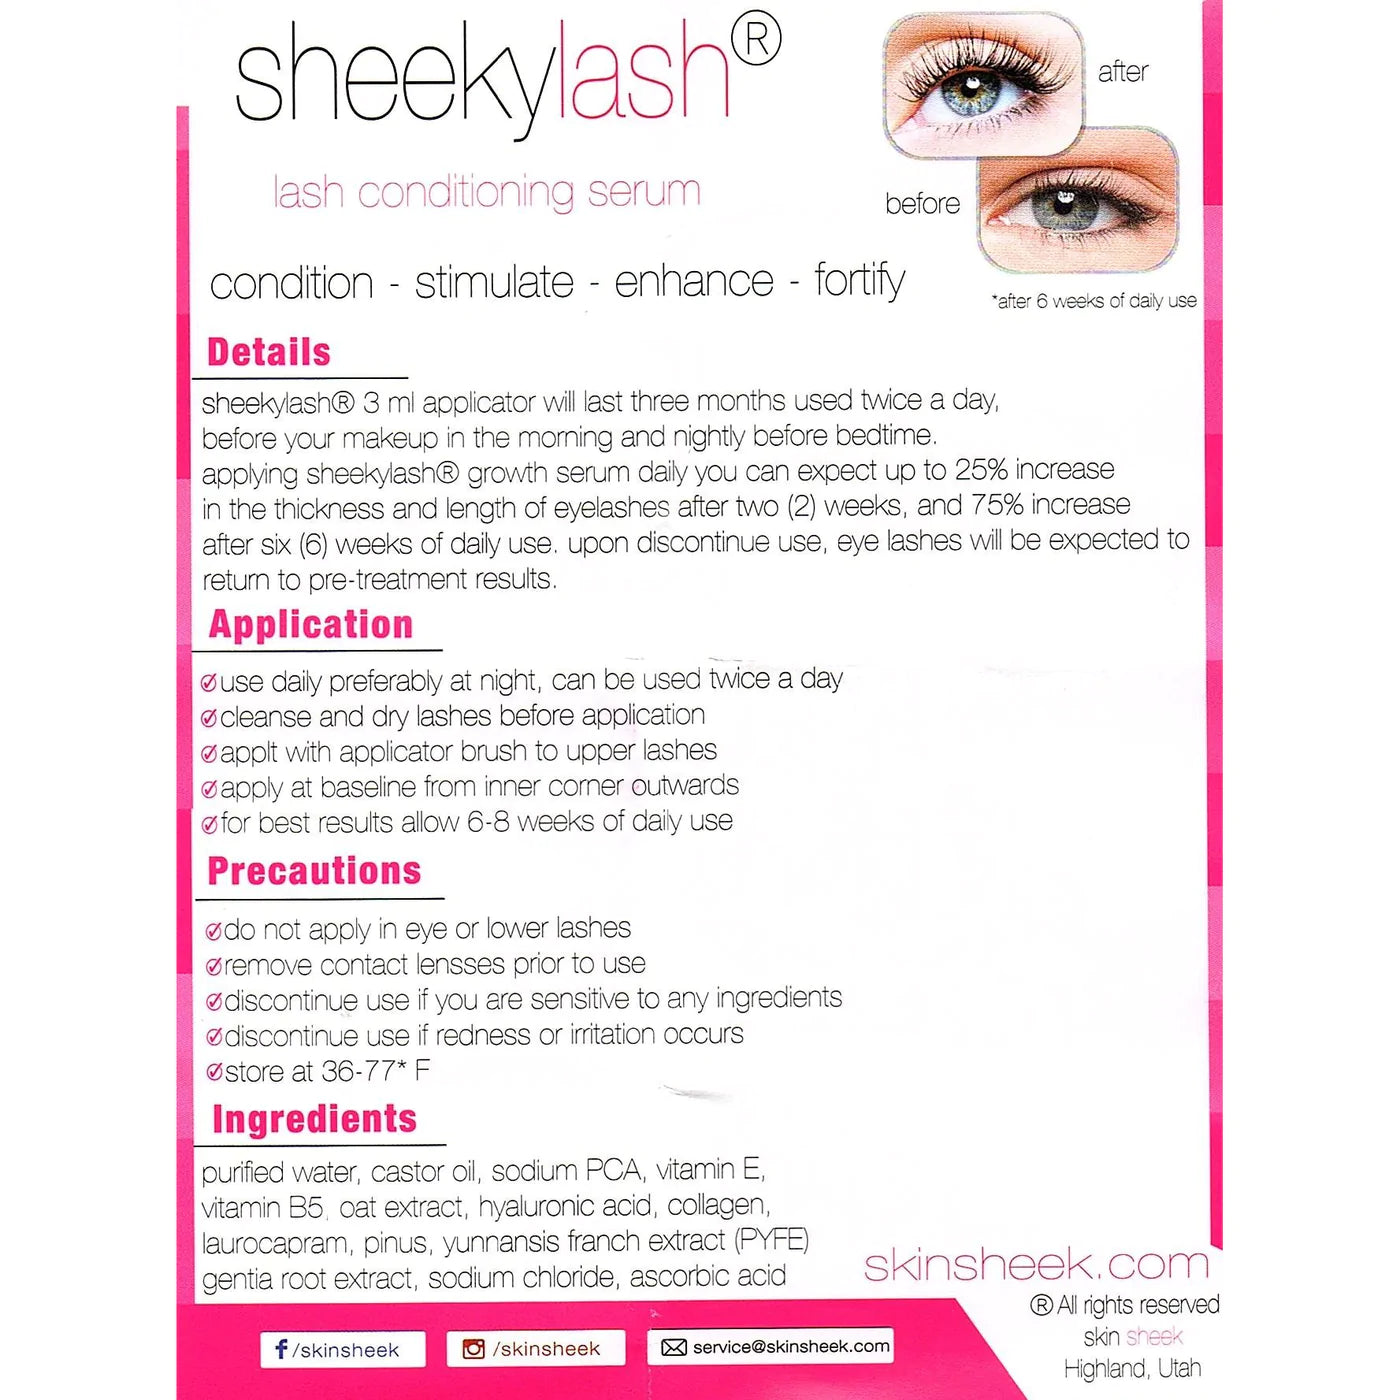 Skin Sheek Sheeky Lash™ Eye Lash Conditioning Serum